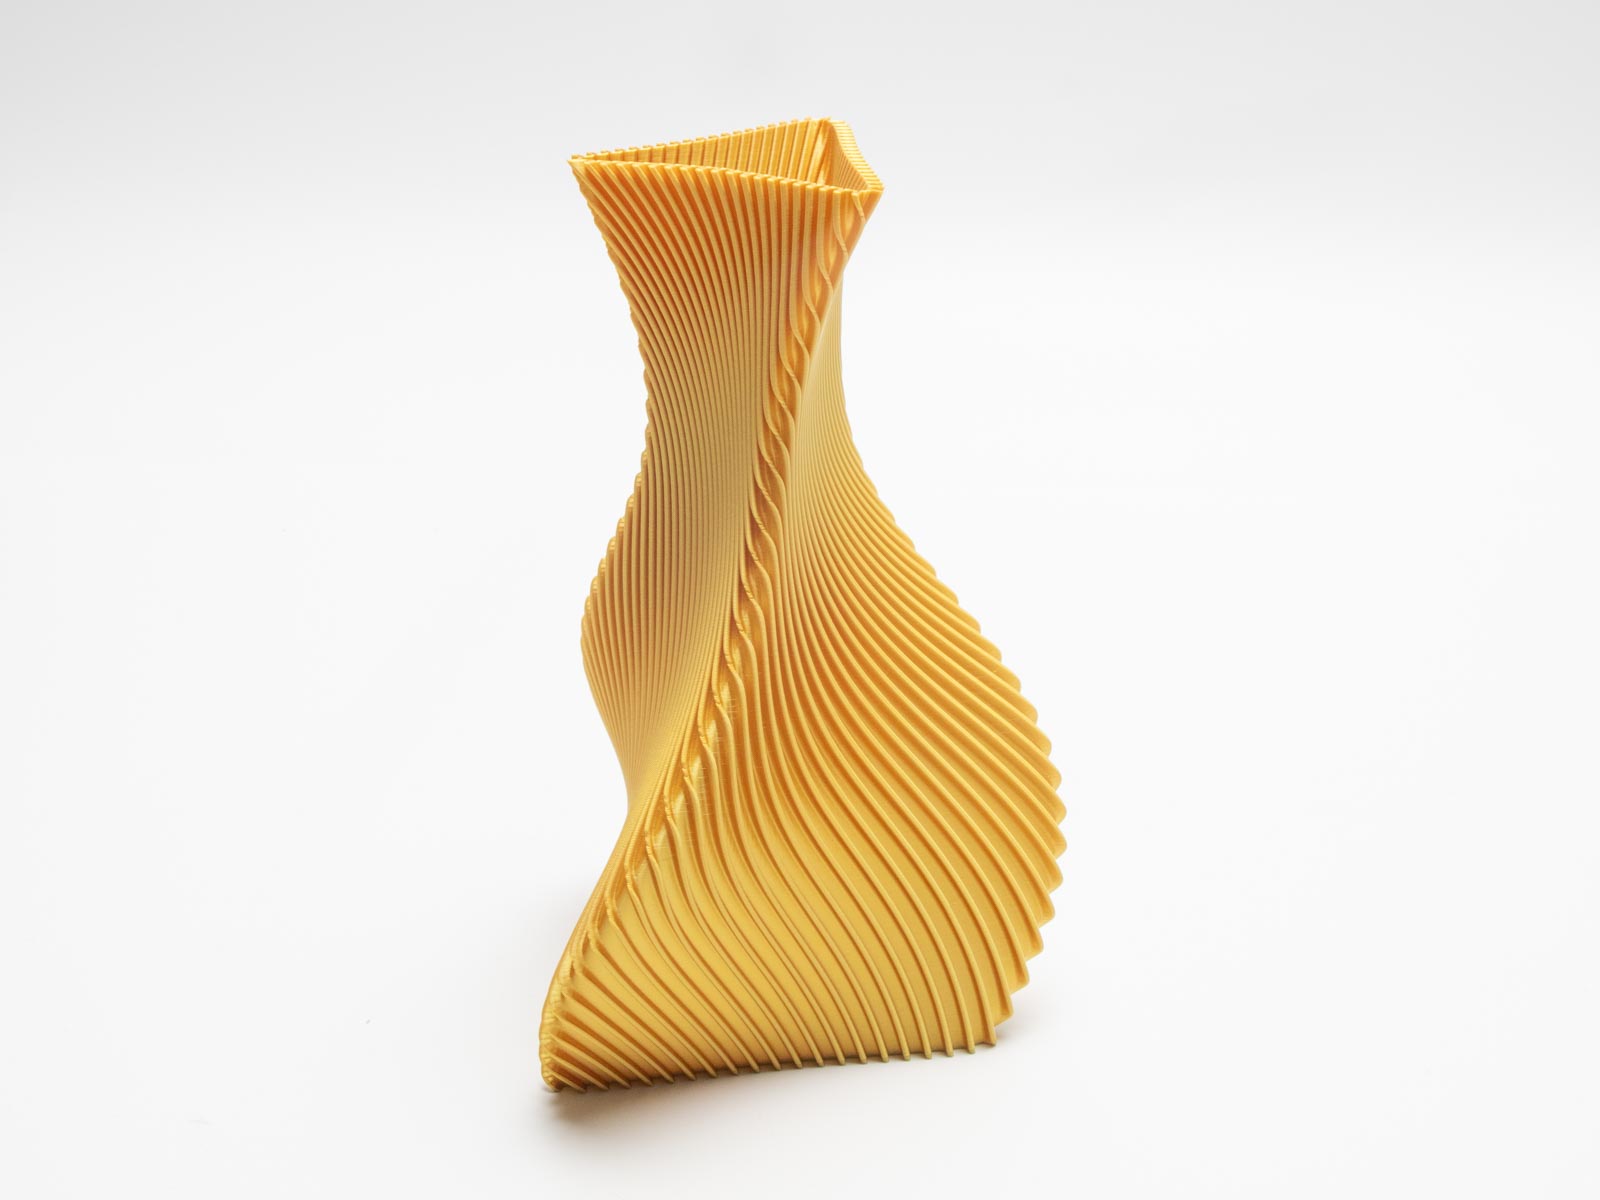 3D Printed Spiral Vase AMY